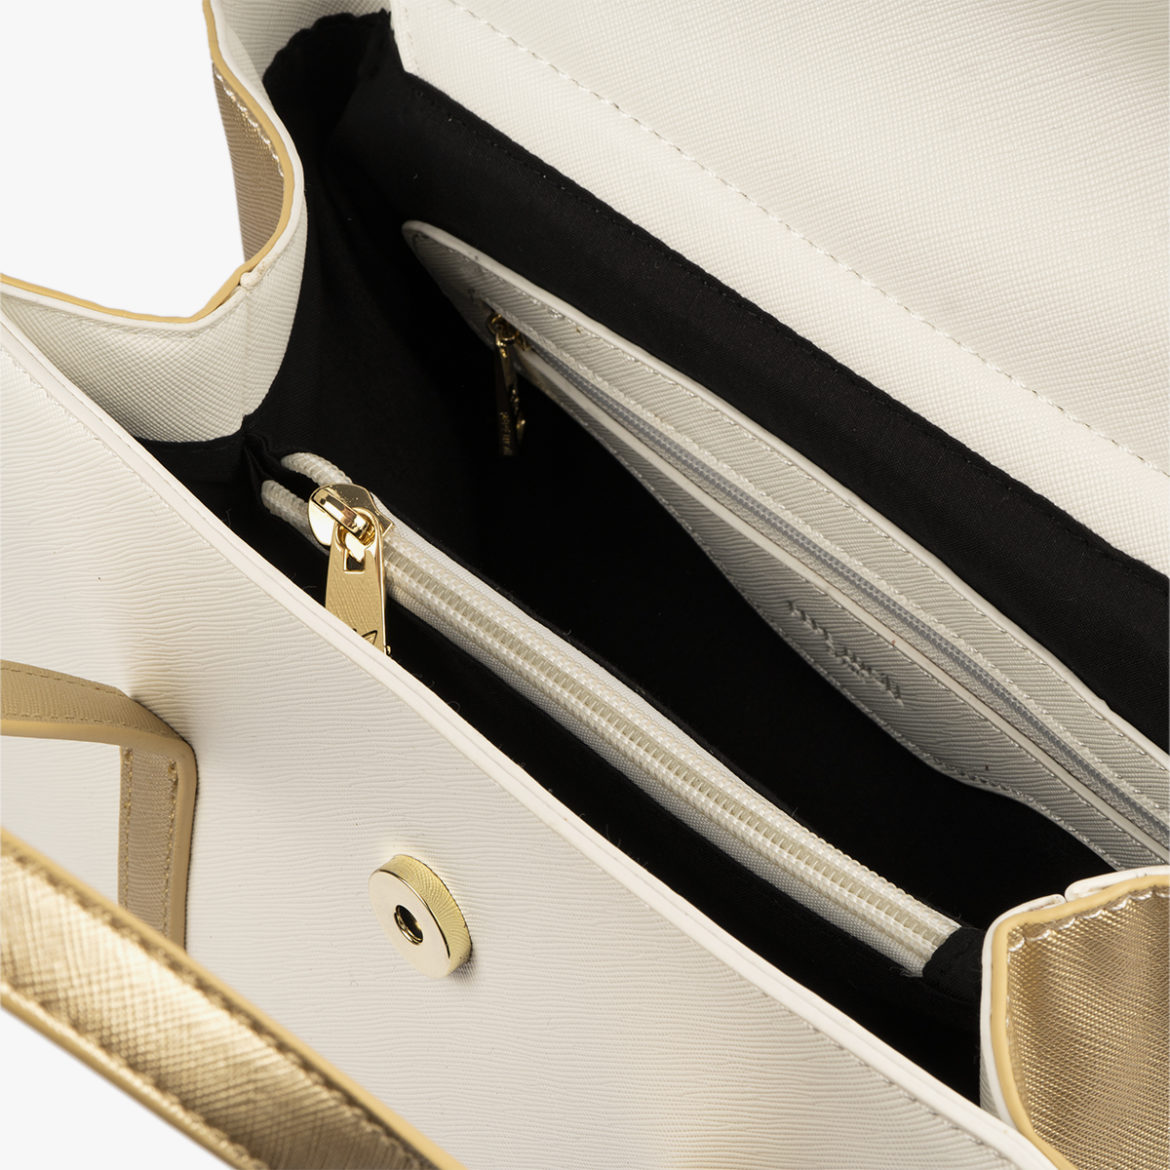 bolso de mano blanco con detalles dorados pepemoll 14125